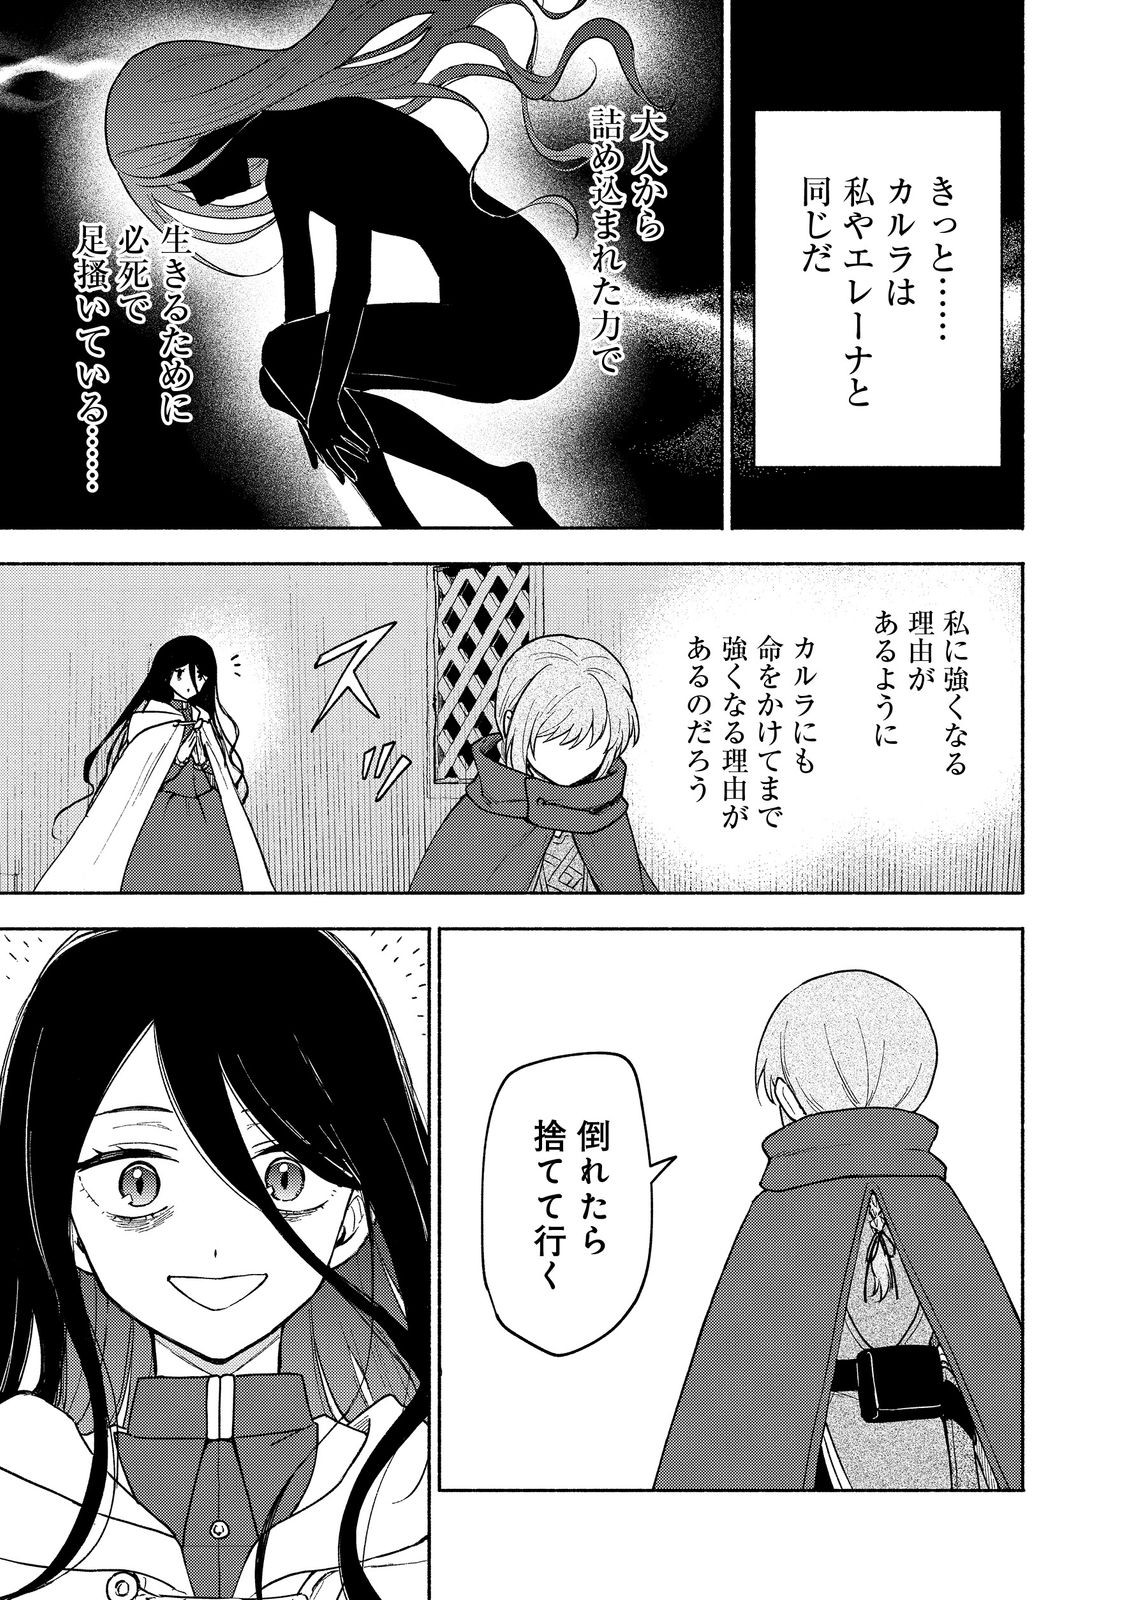 Otome Game no Heroine de Saikyou Survival - Chapter 23 - Page 7